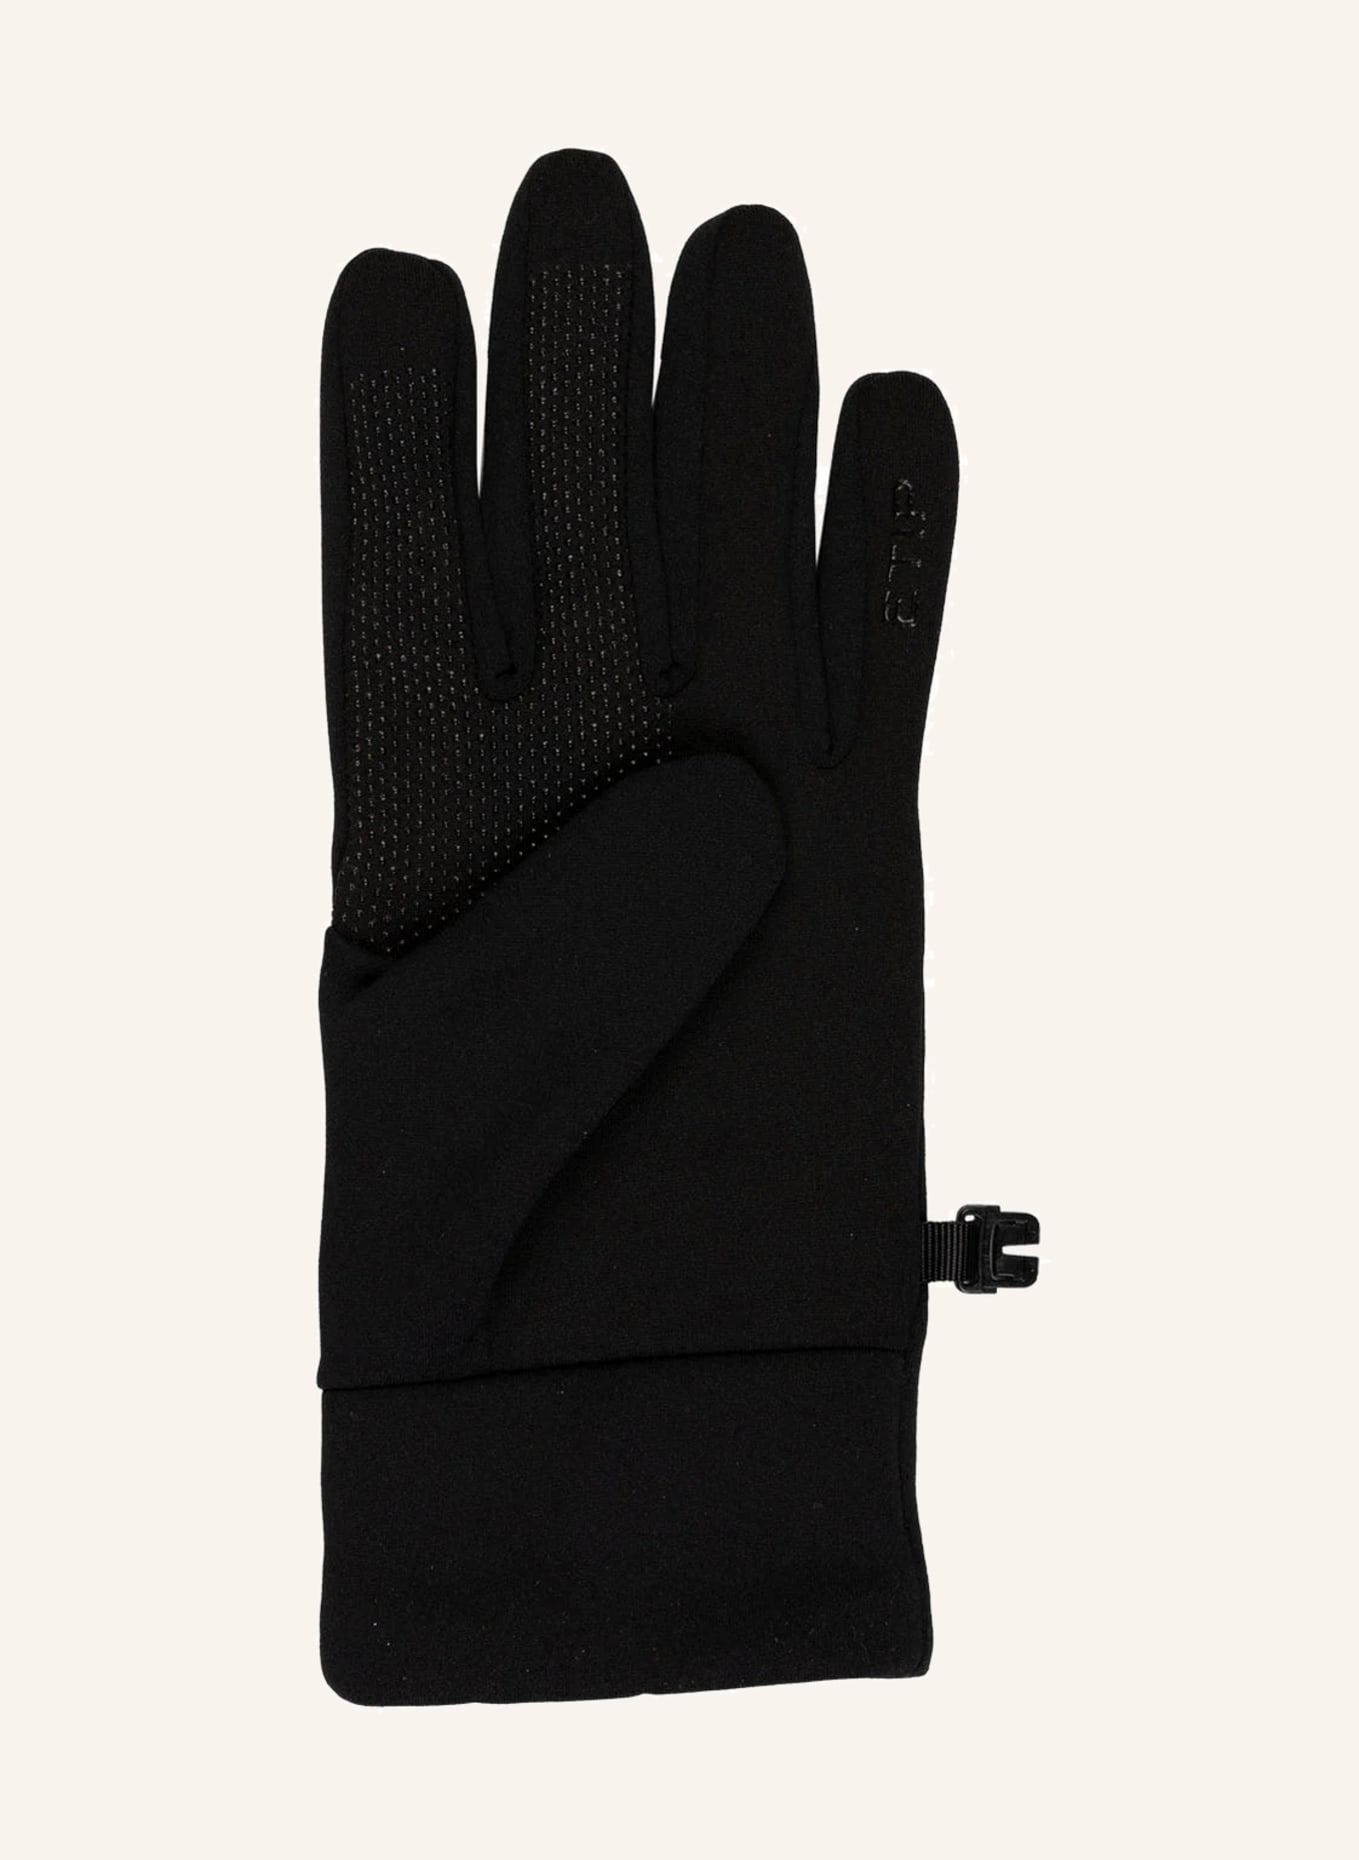 tnf THE ETIP black mit Touchscreen-Funktion in Multisport-Handschuhe NORTH jk3 FACE